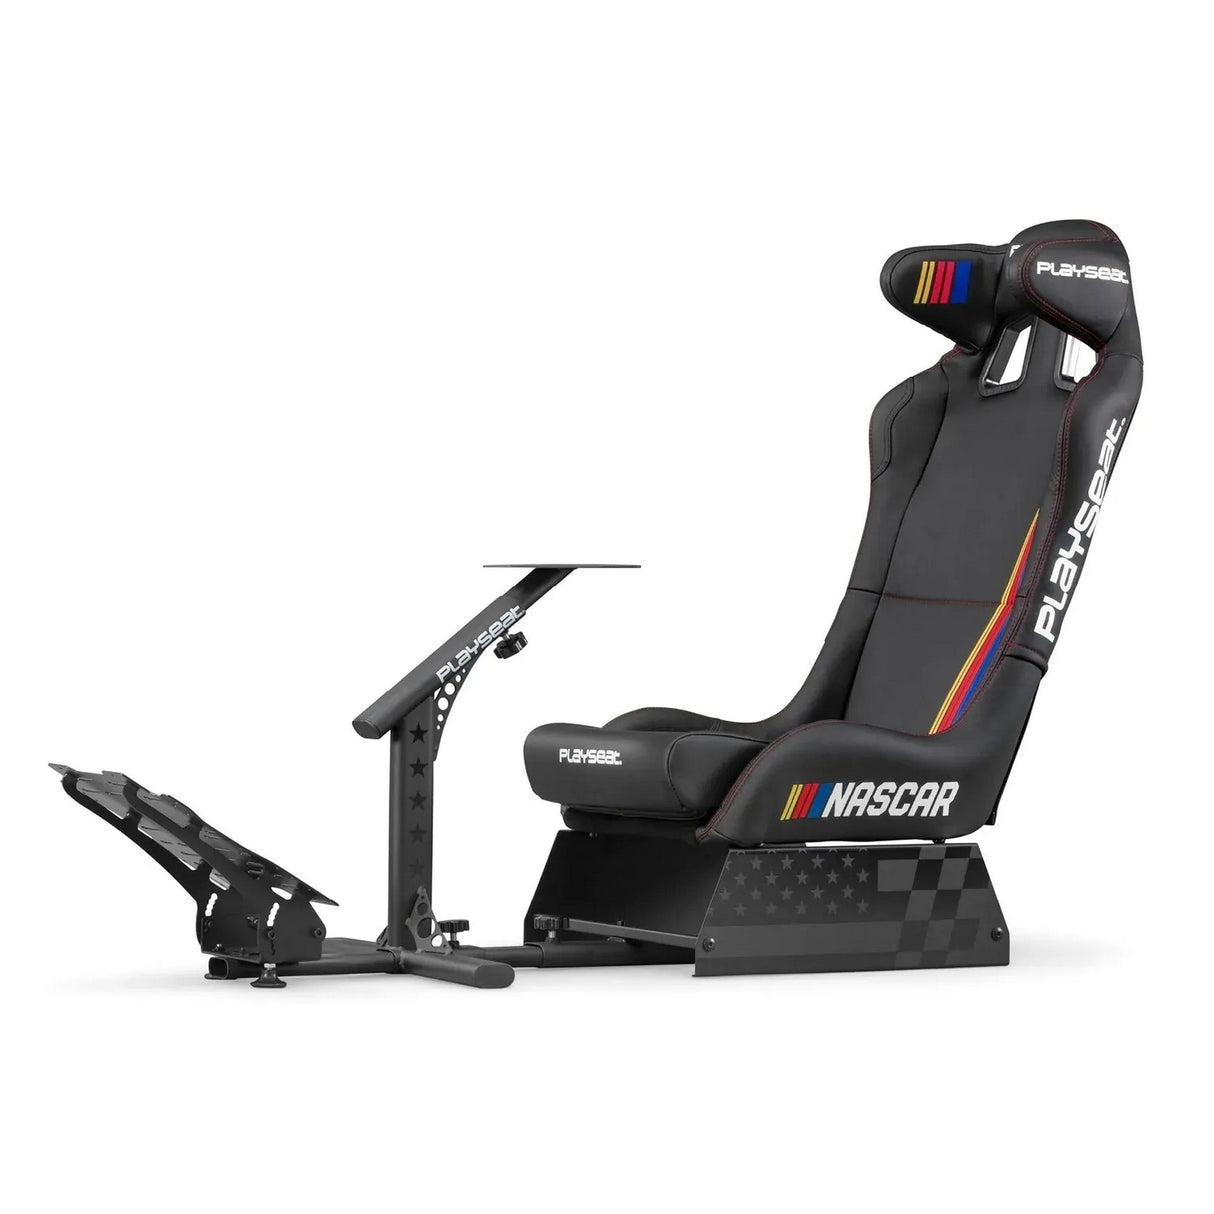 Playseat Evolution Pro Gaming Racing Seat, NASCAR Edition